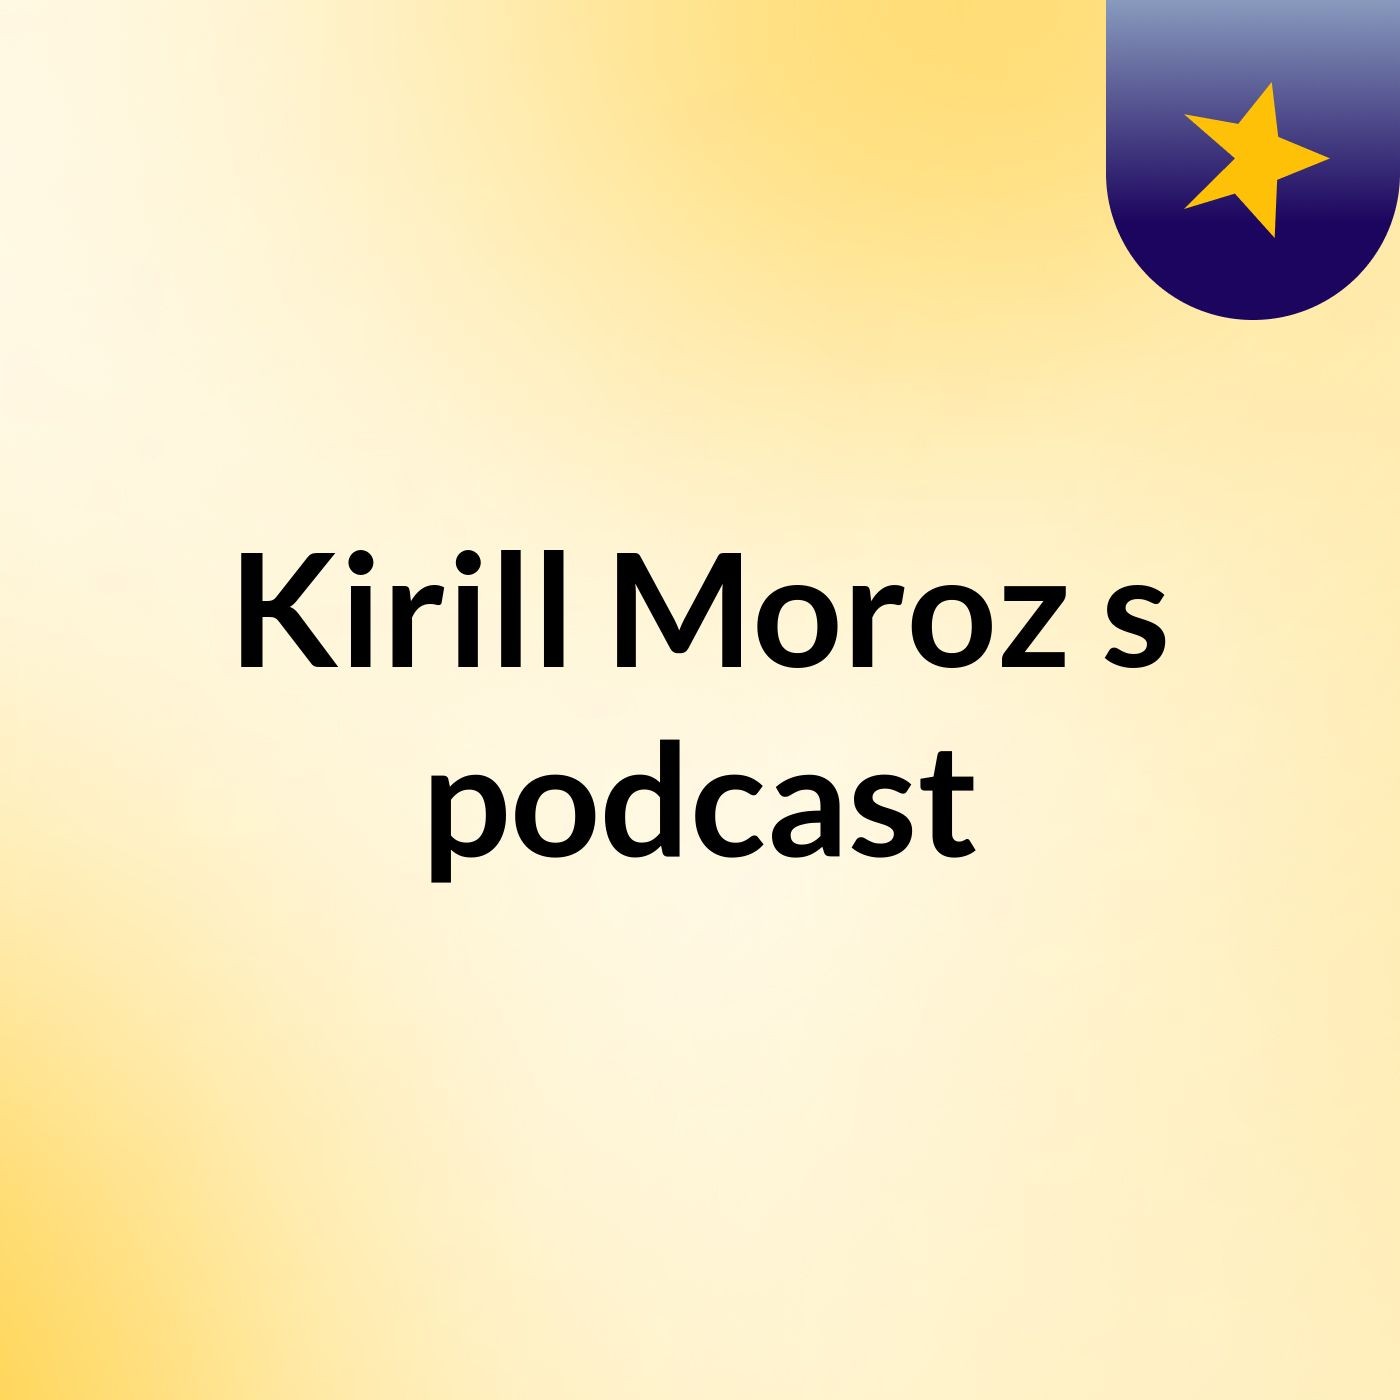 Kirill Moroz's podcast